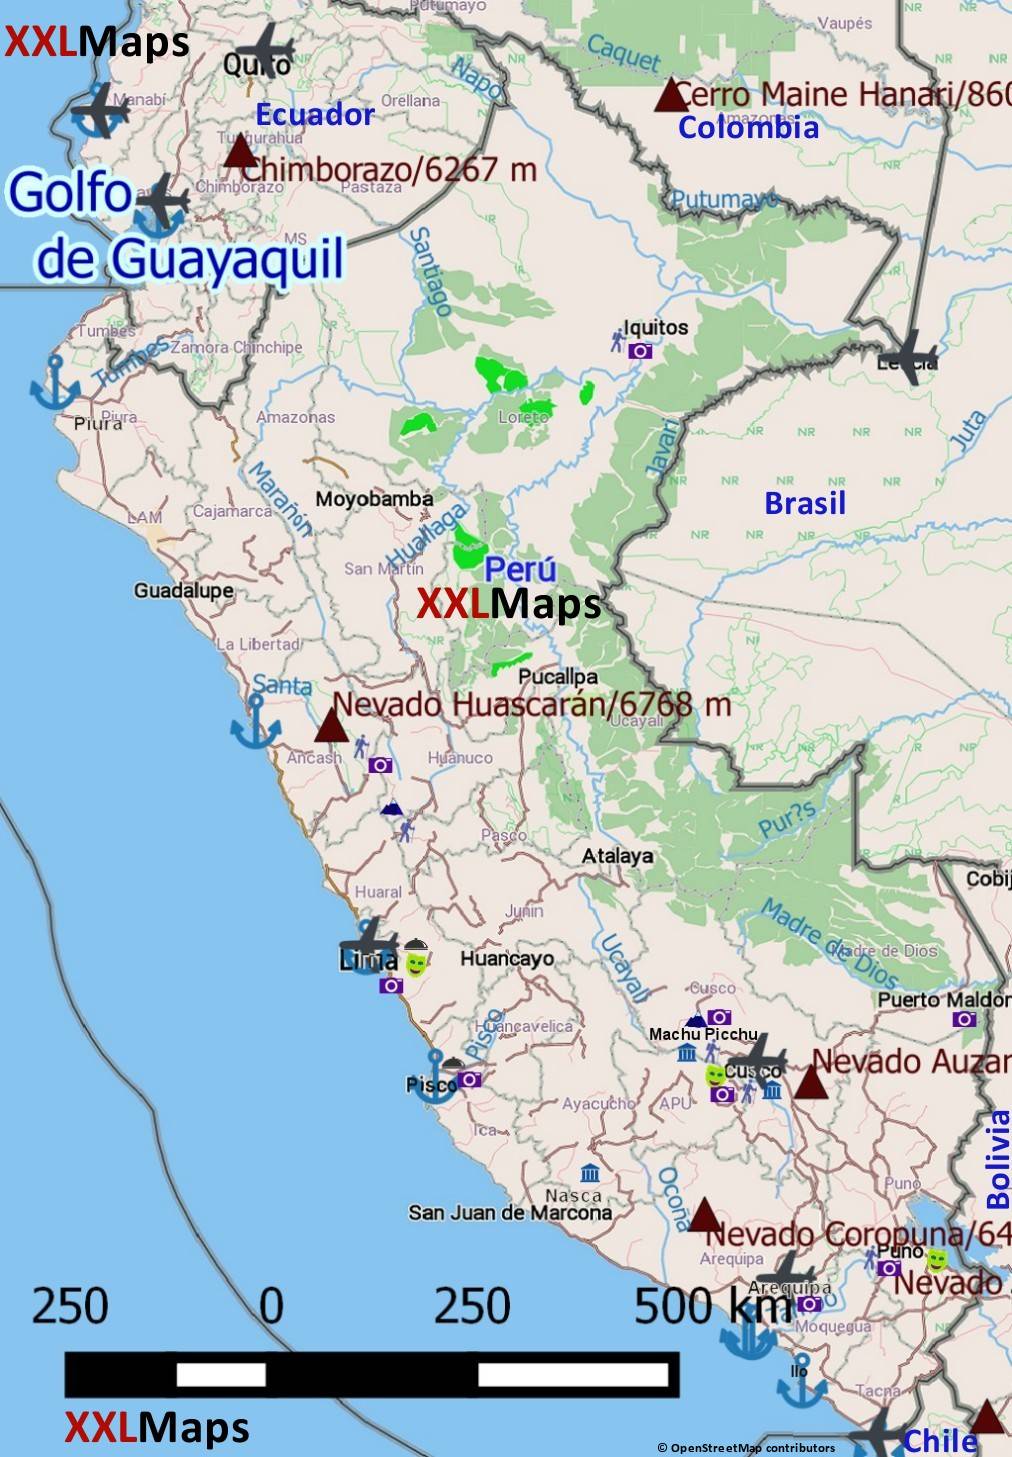 Tourist map of Peru